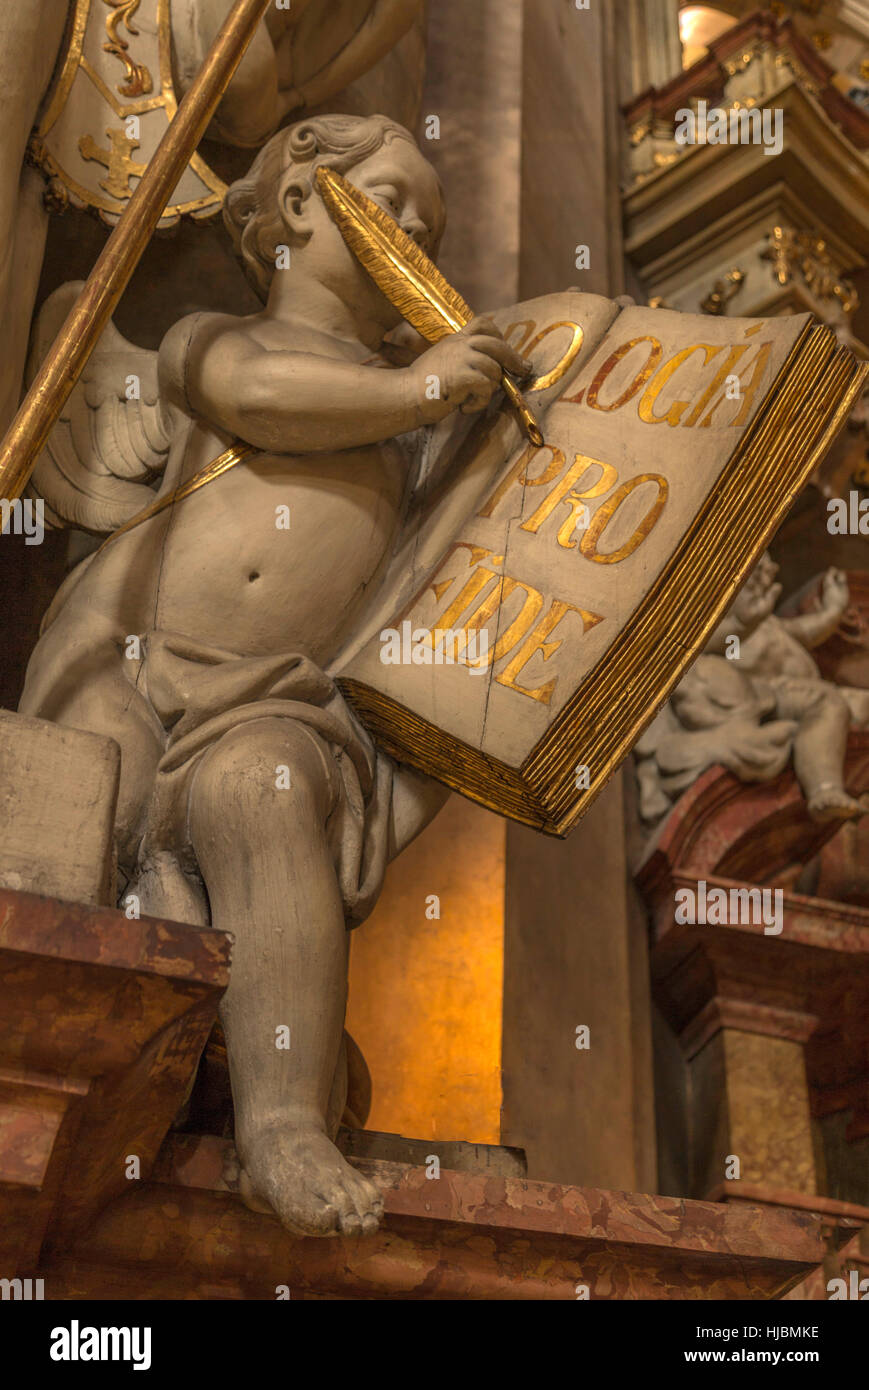 Cherub statue in the St. Nicholas Church, a Baroque architectural gem in Malá Strana, the Lesser Town, Prague 1, Czech Republic. Stock Photo